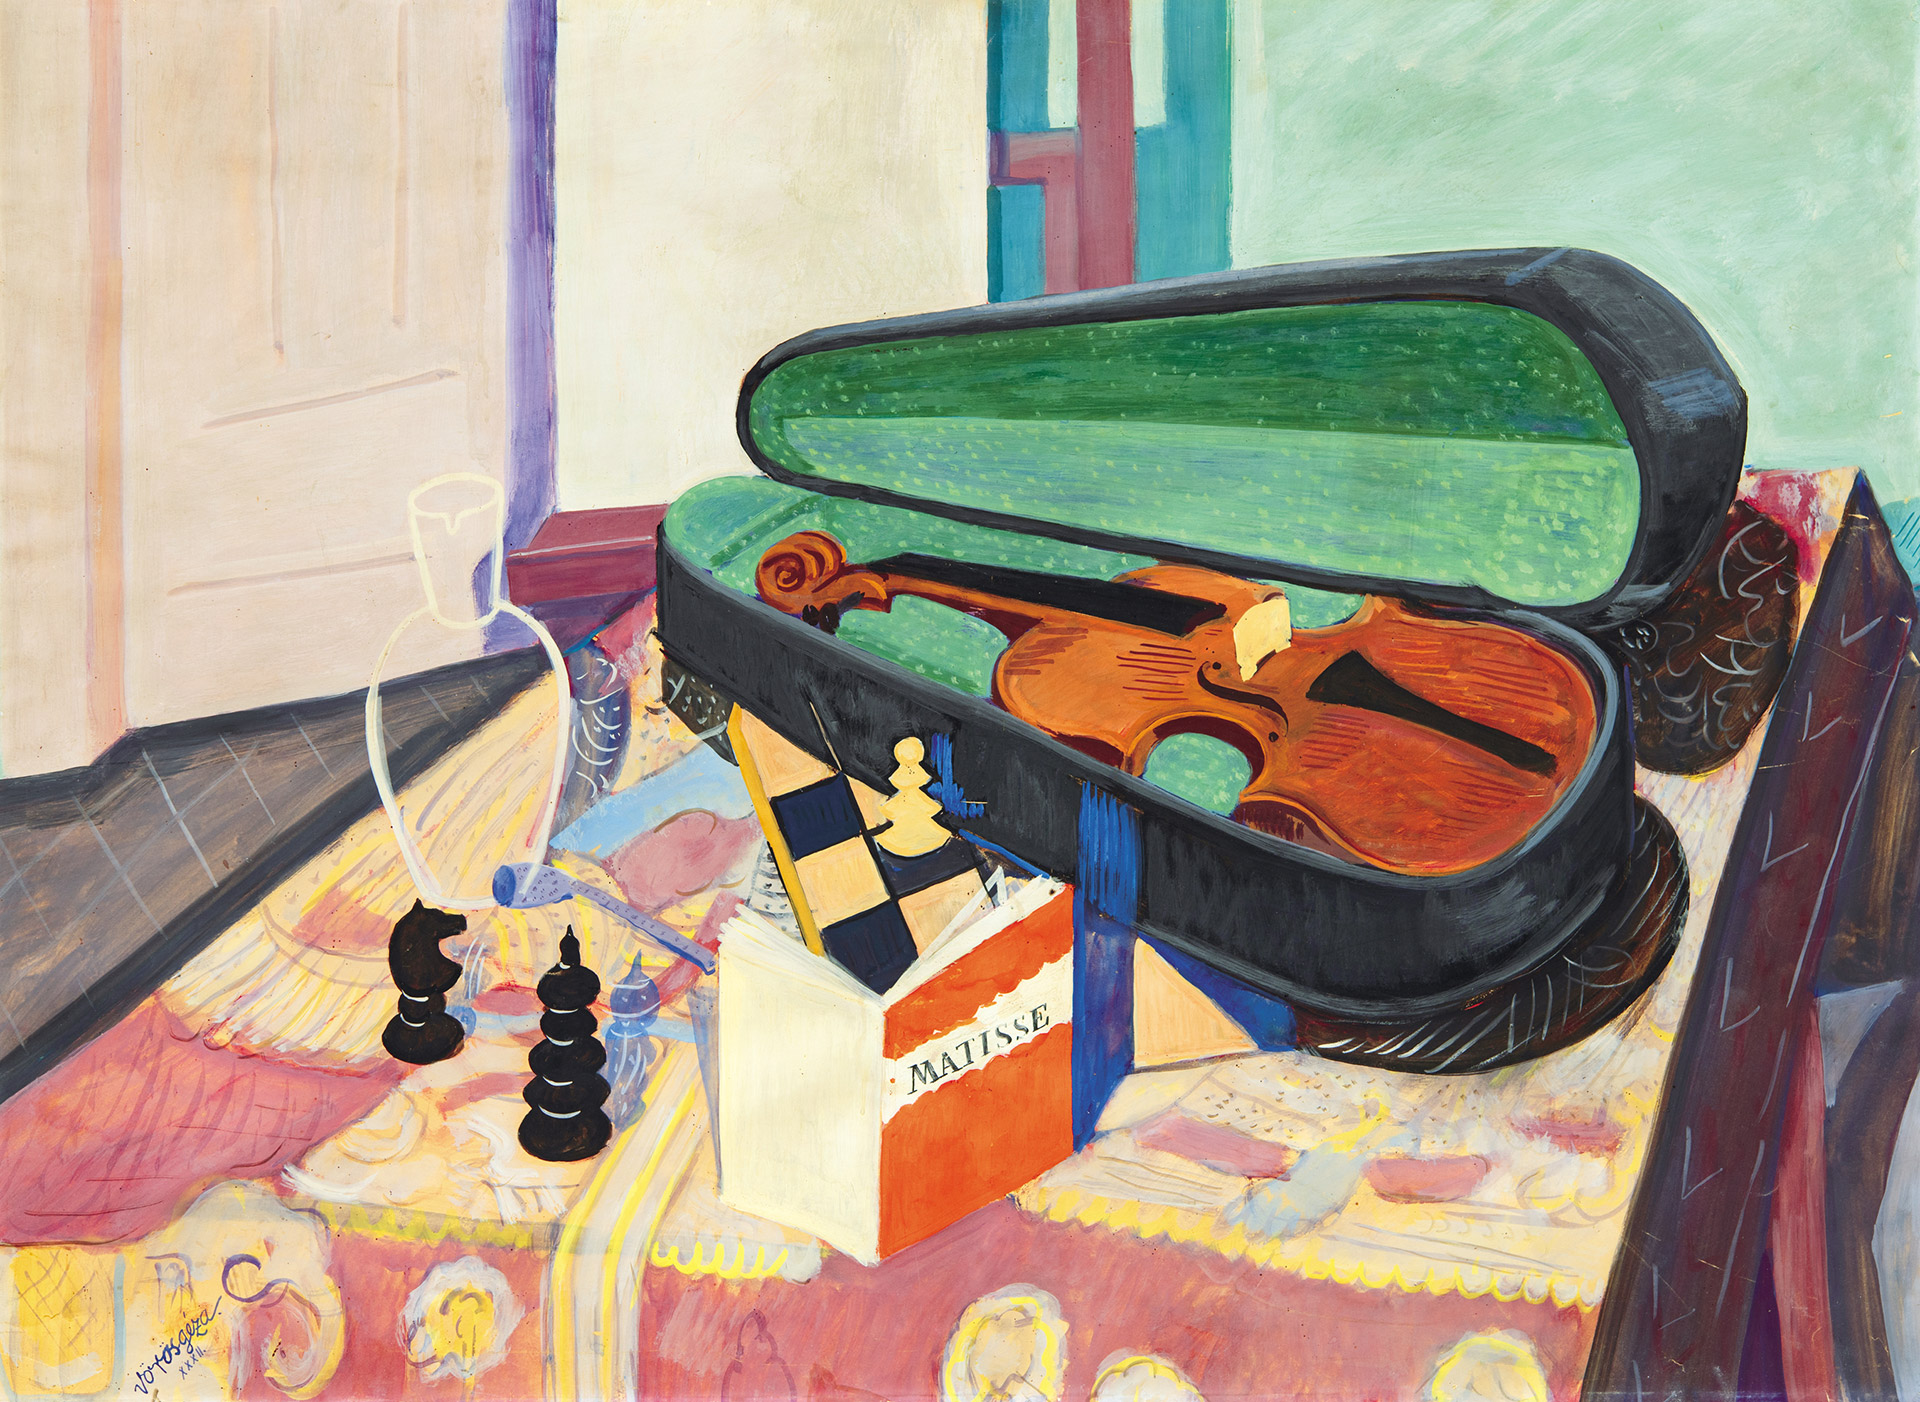 Vörös Géza (1897-1957) Still-life with Violin and Mattisse-book, 1932